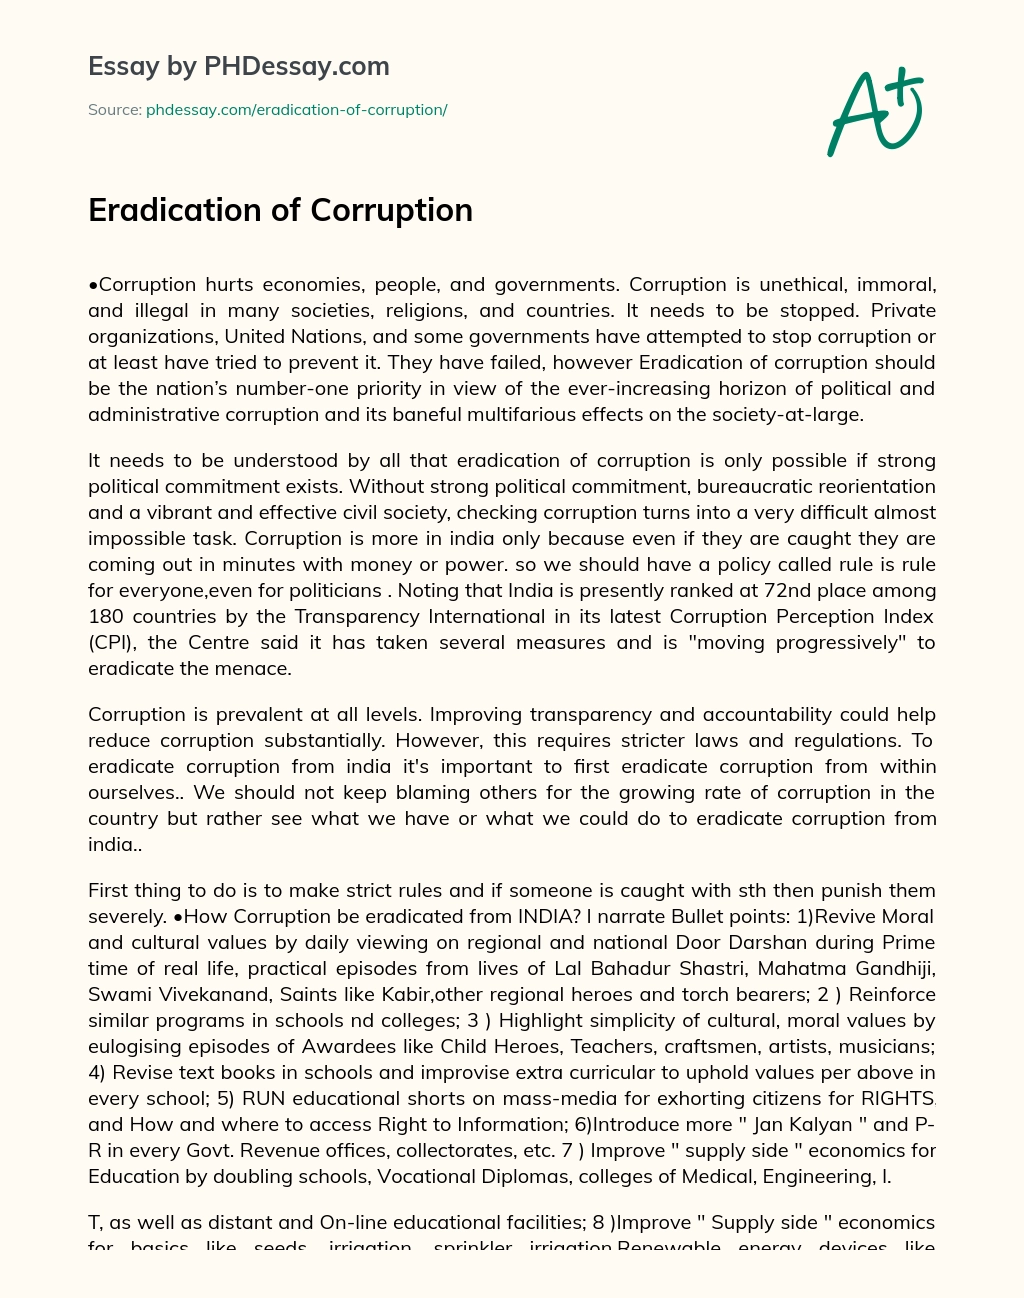 eradication of corruption in india